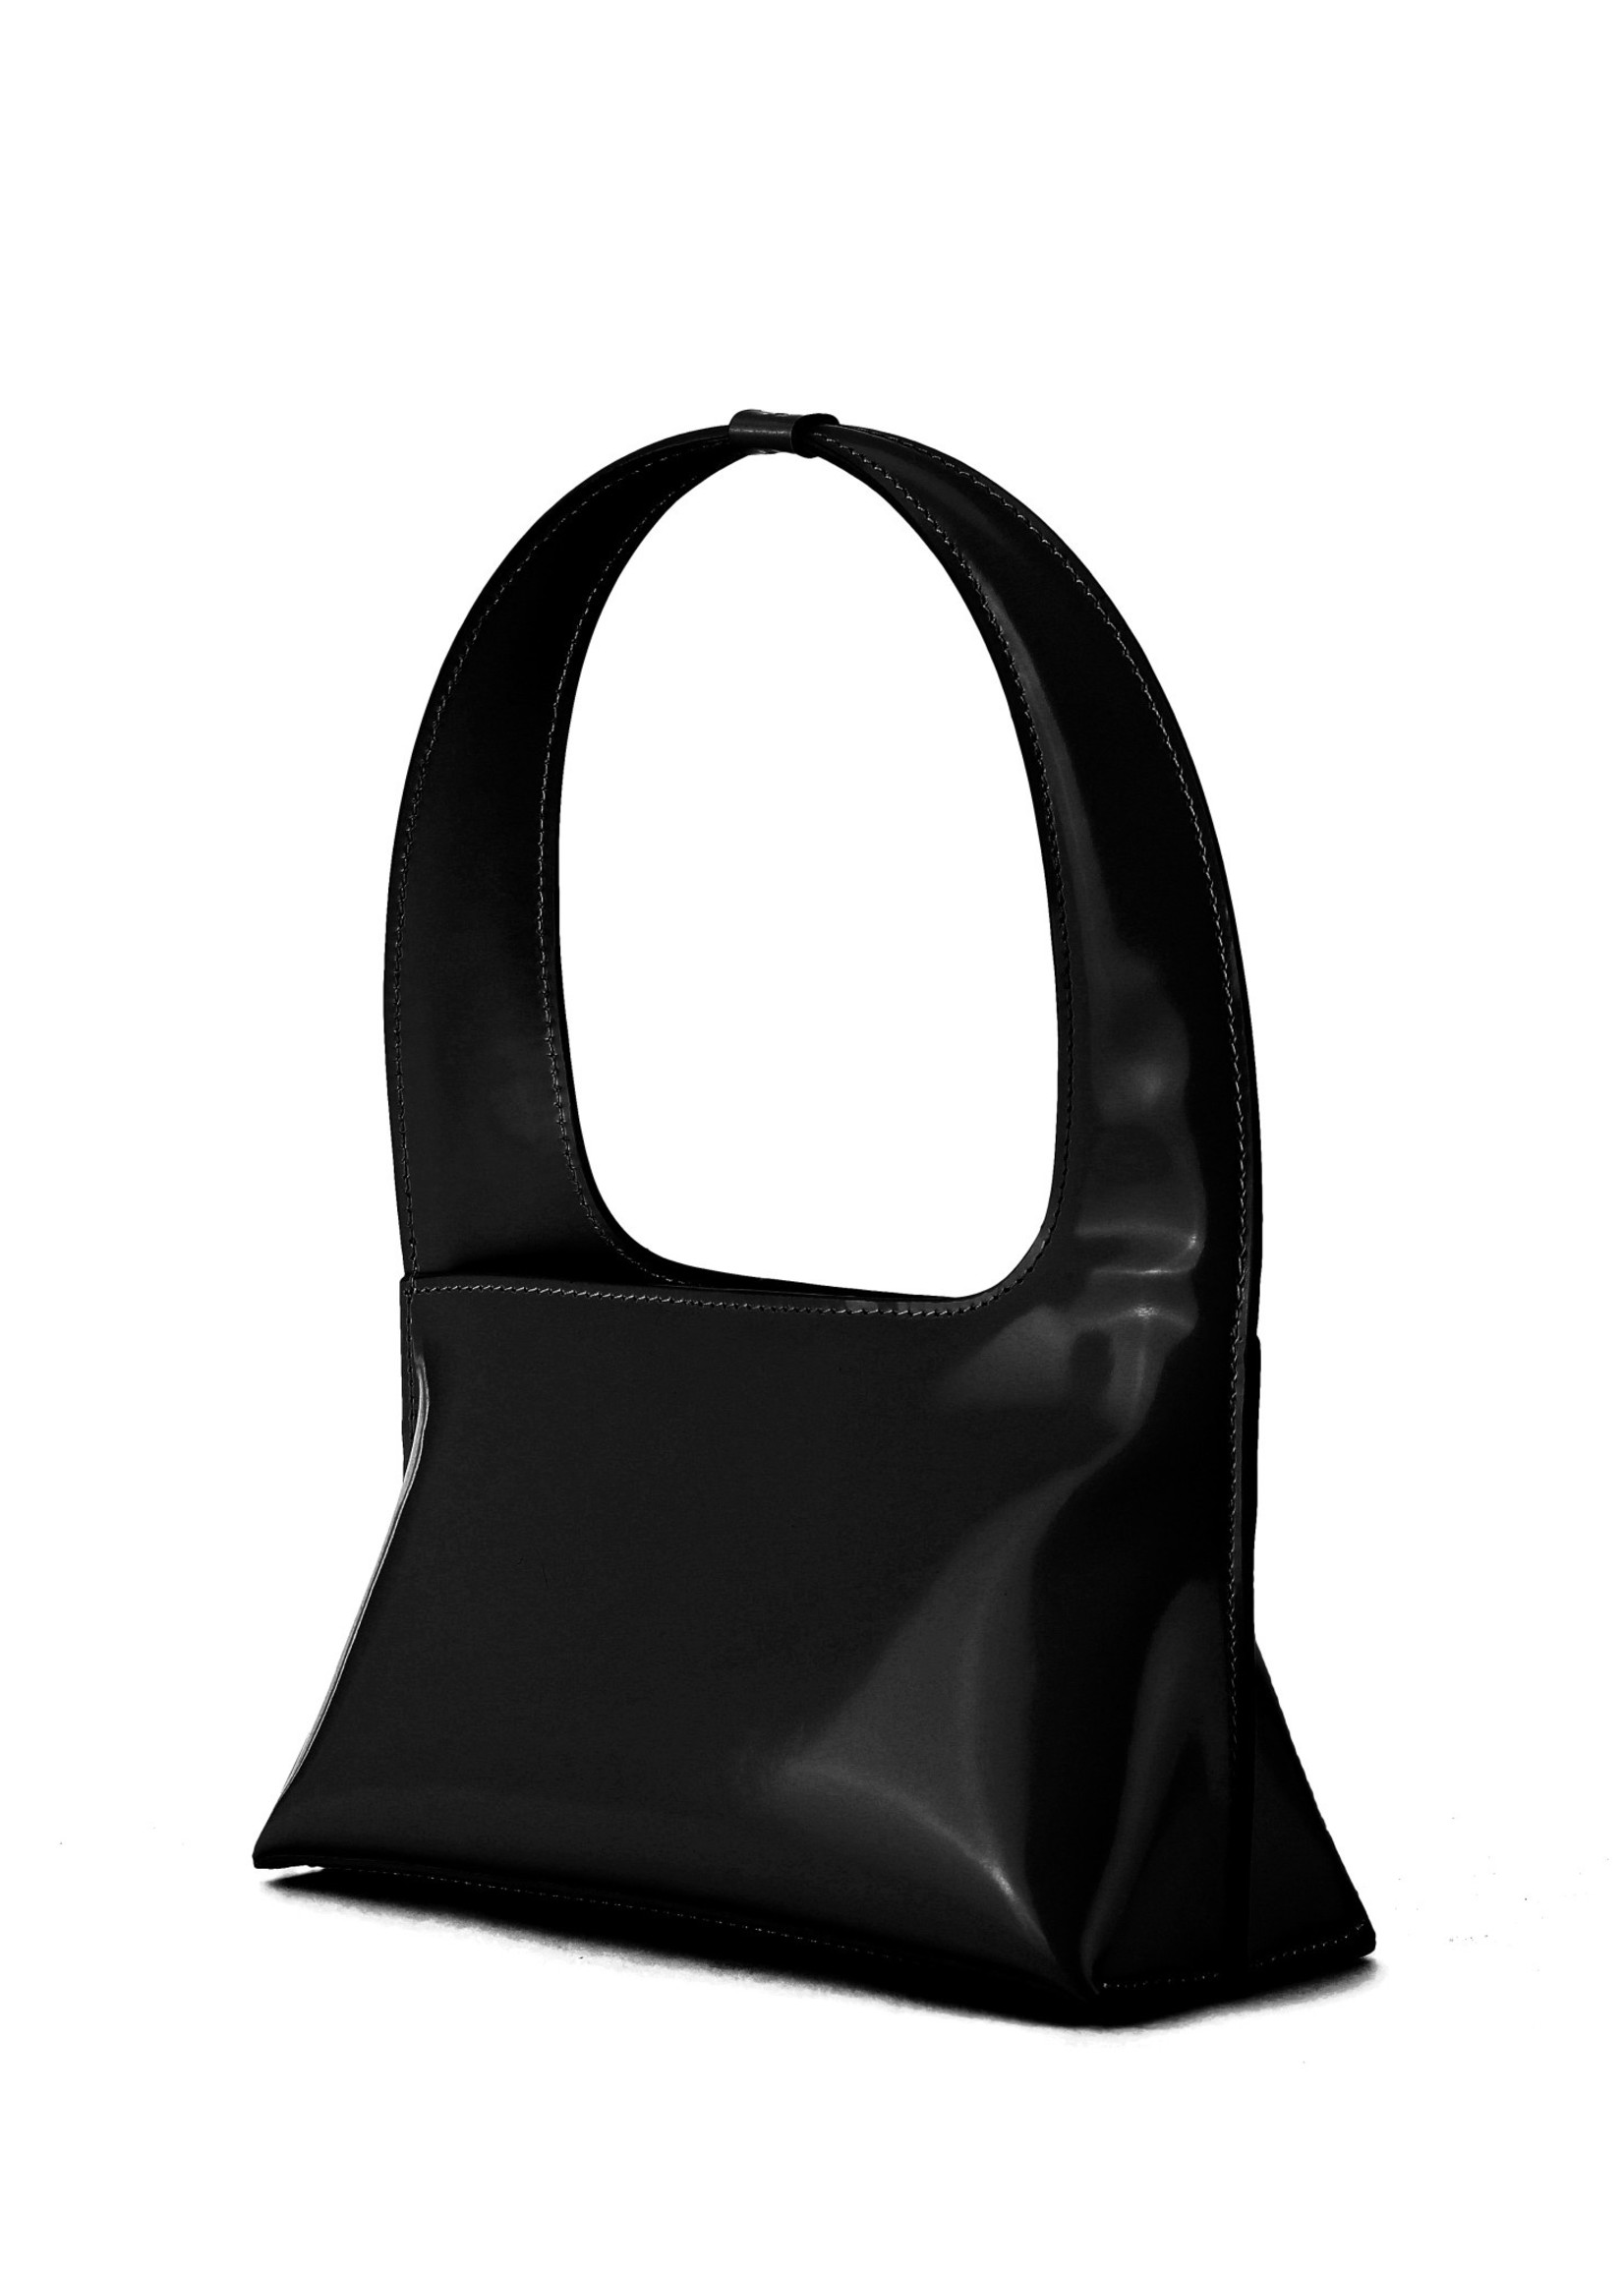 OSOI Bridge Mini Bag in Black